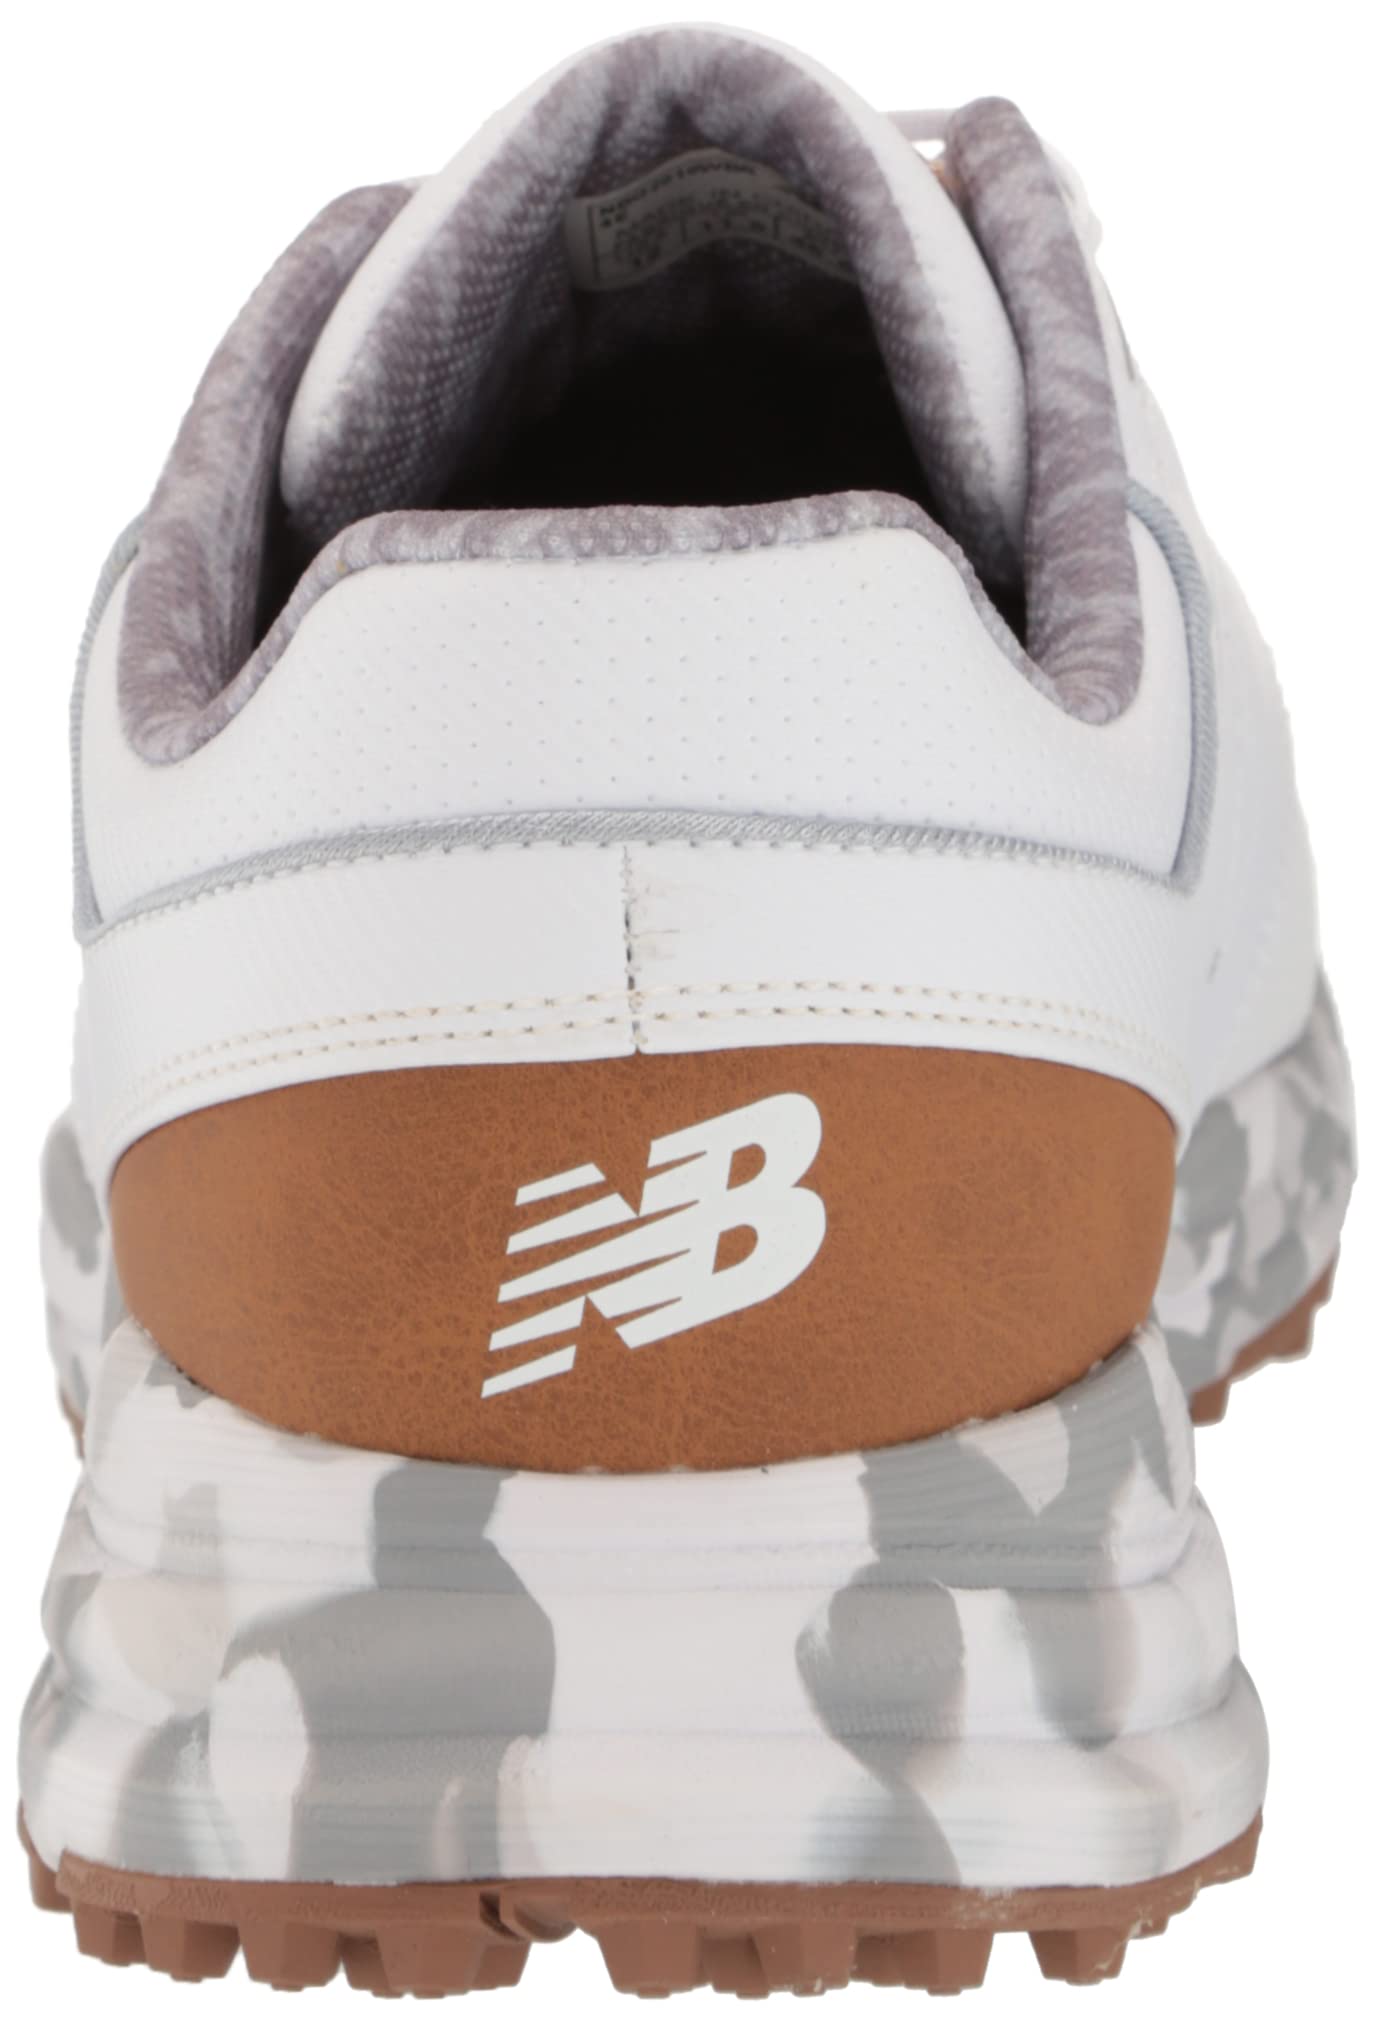 New Balance Men's Brighton Golf Shoe